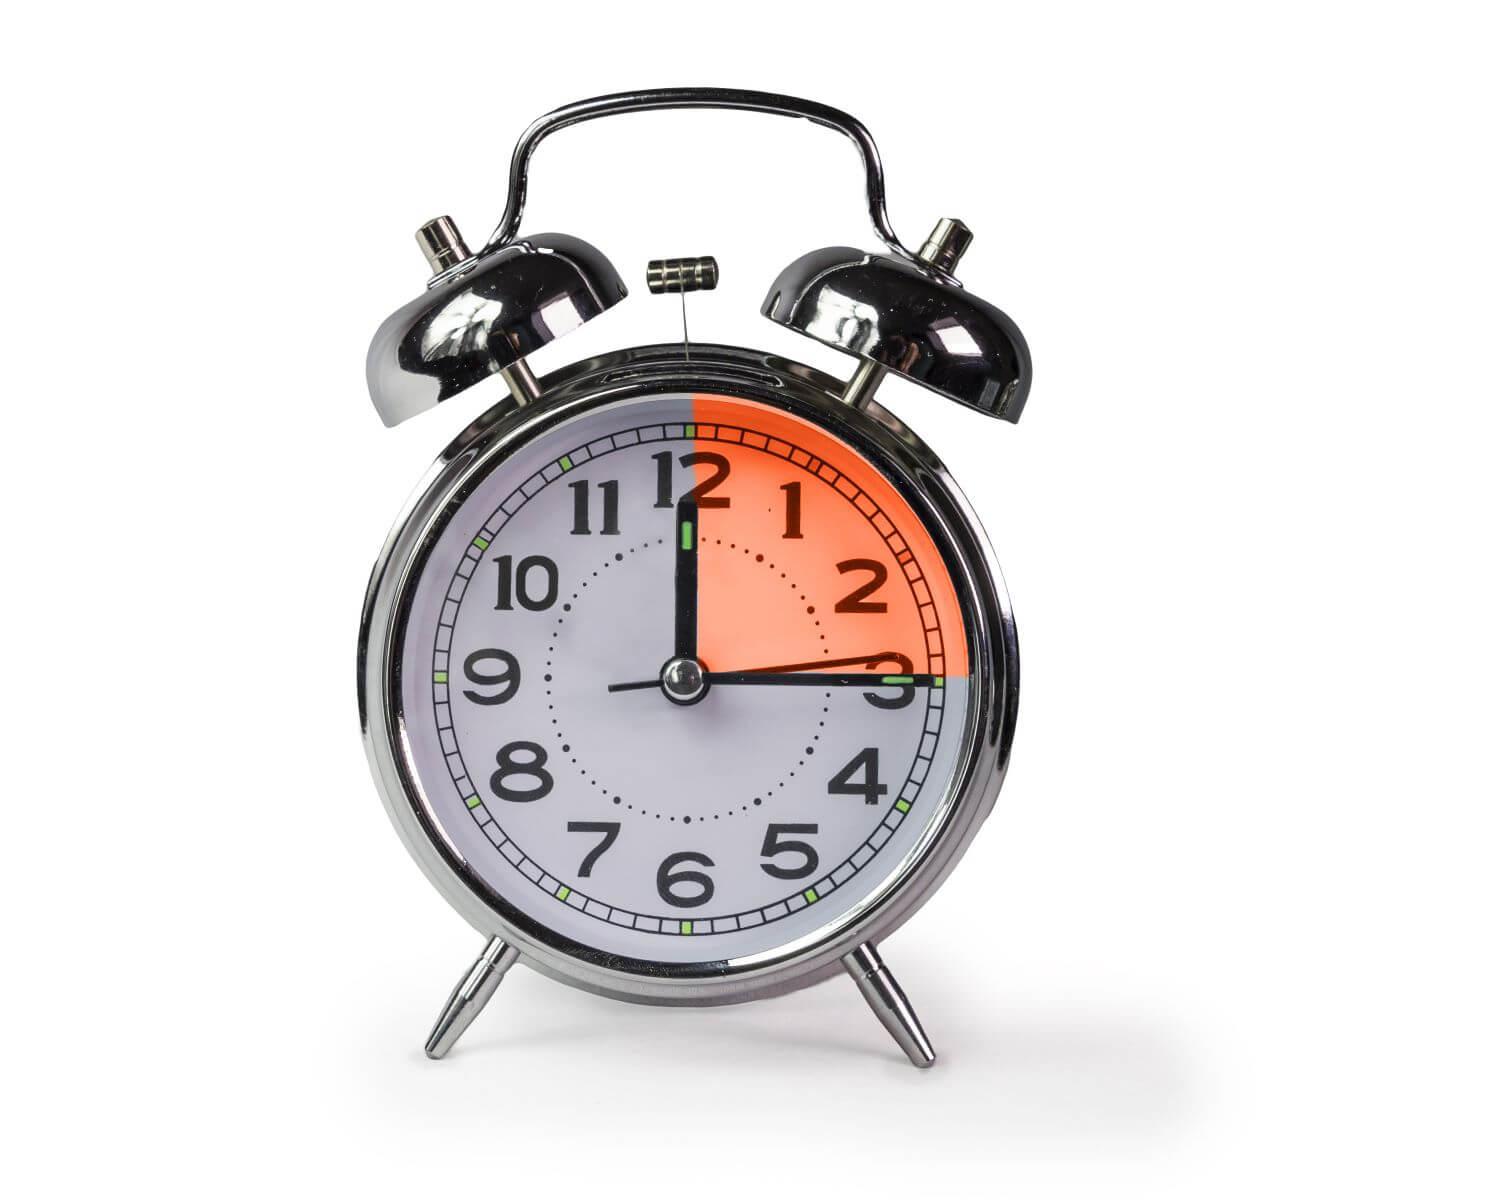 Alarm clock showing 15 minutes